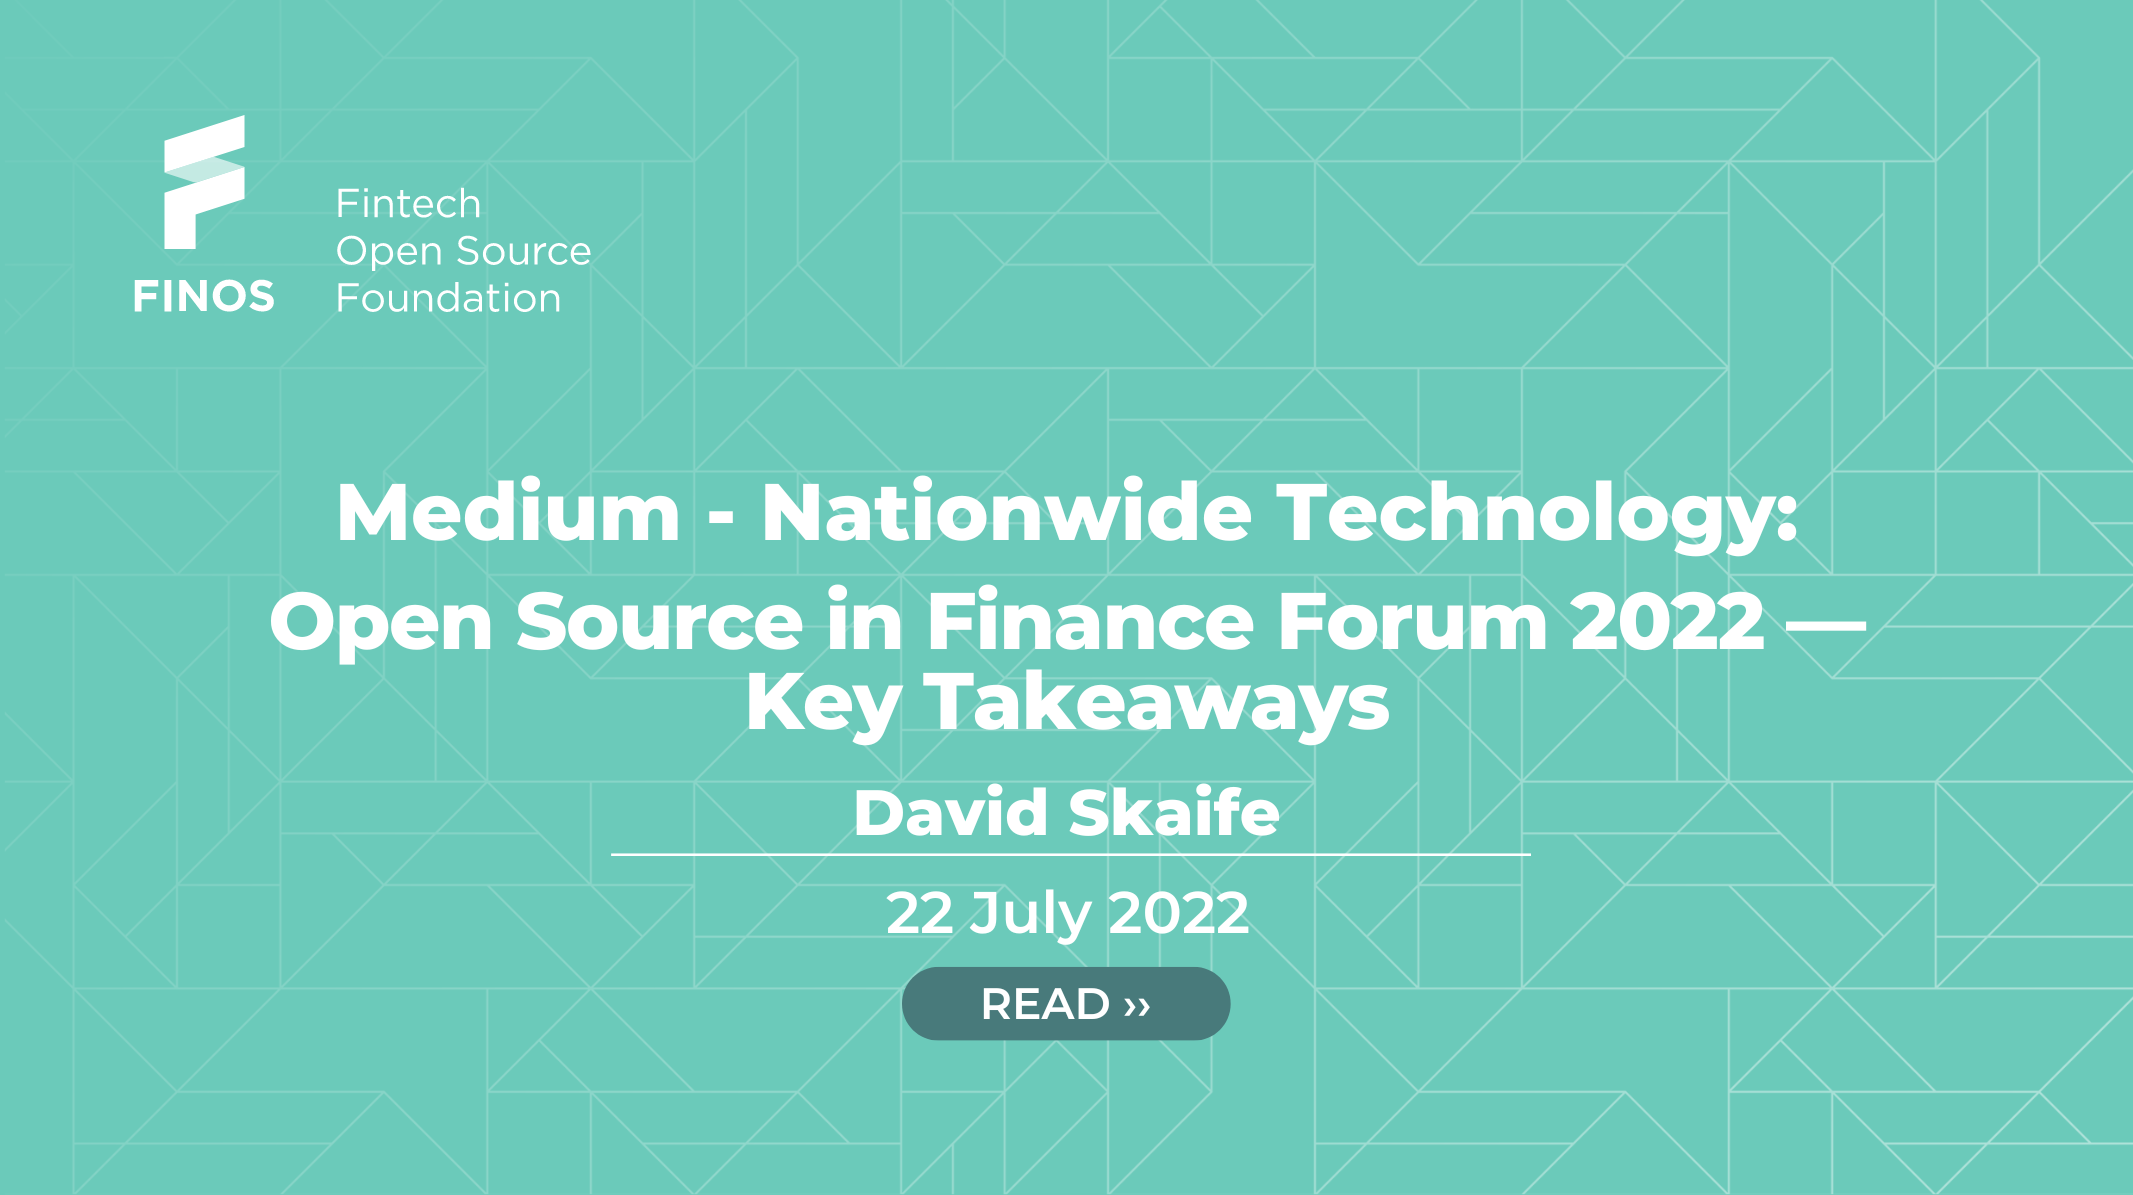 Medium - Nationwide Technology: OSFF 2022 London - Key Takeaways